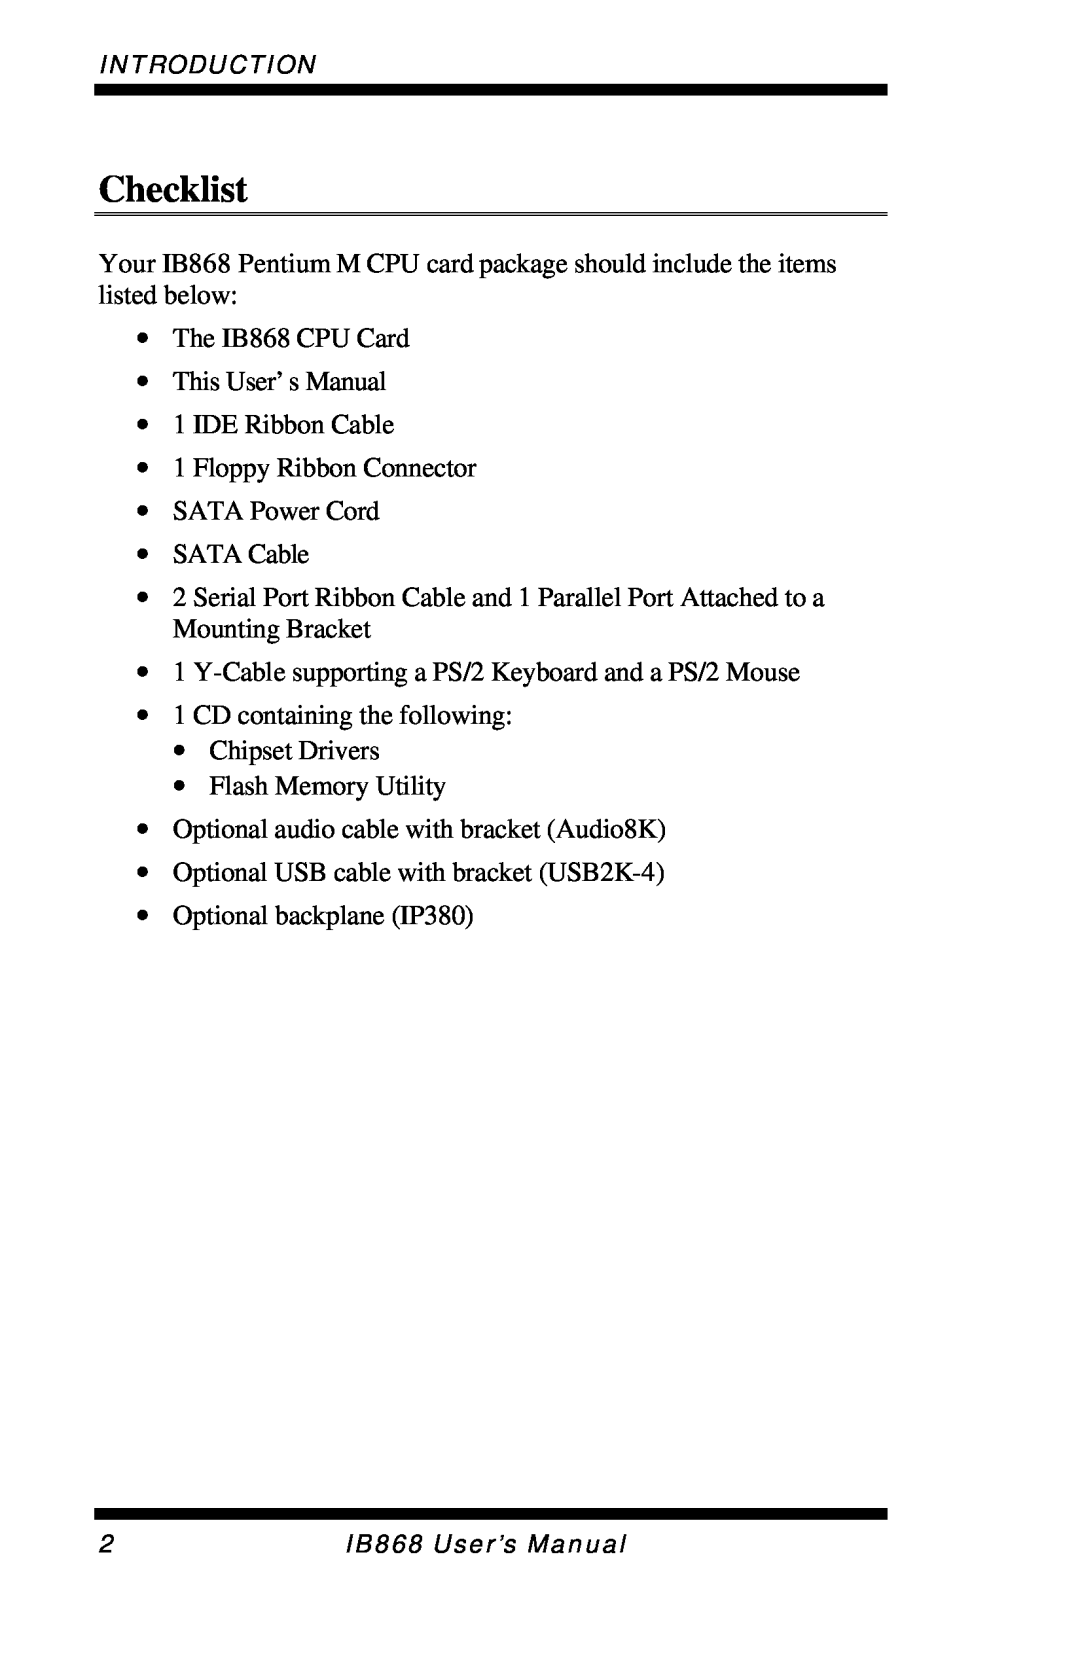 Intel IB868 user manual Checklist 